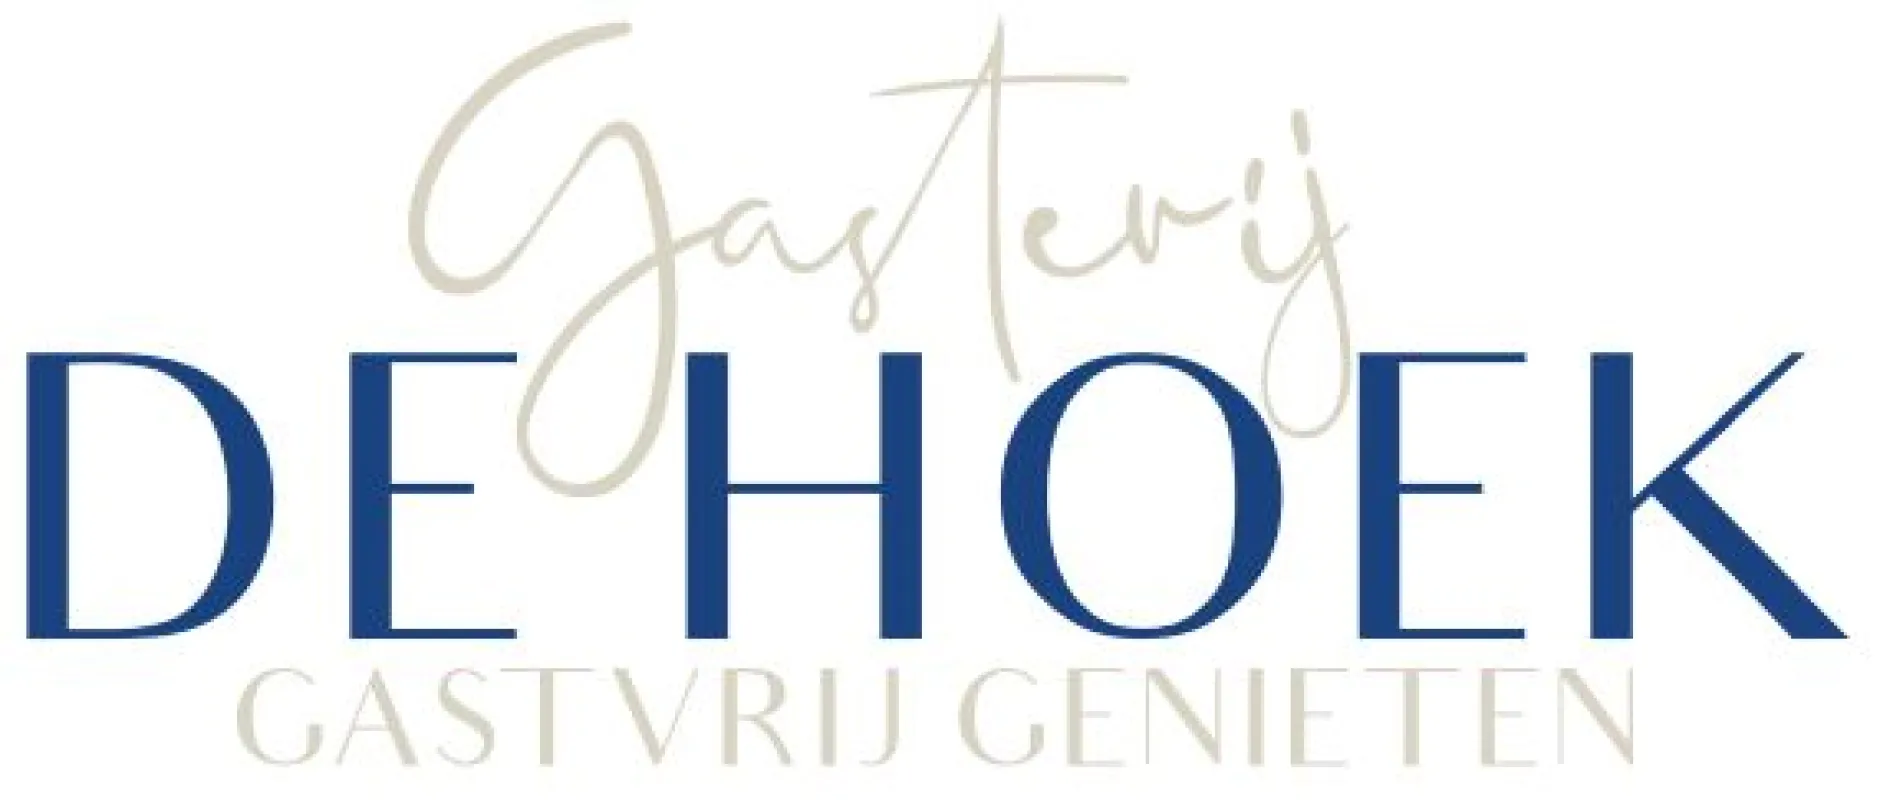 Gasterij de Hoek logo